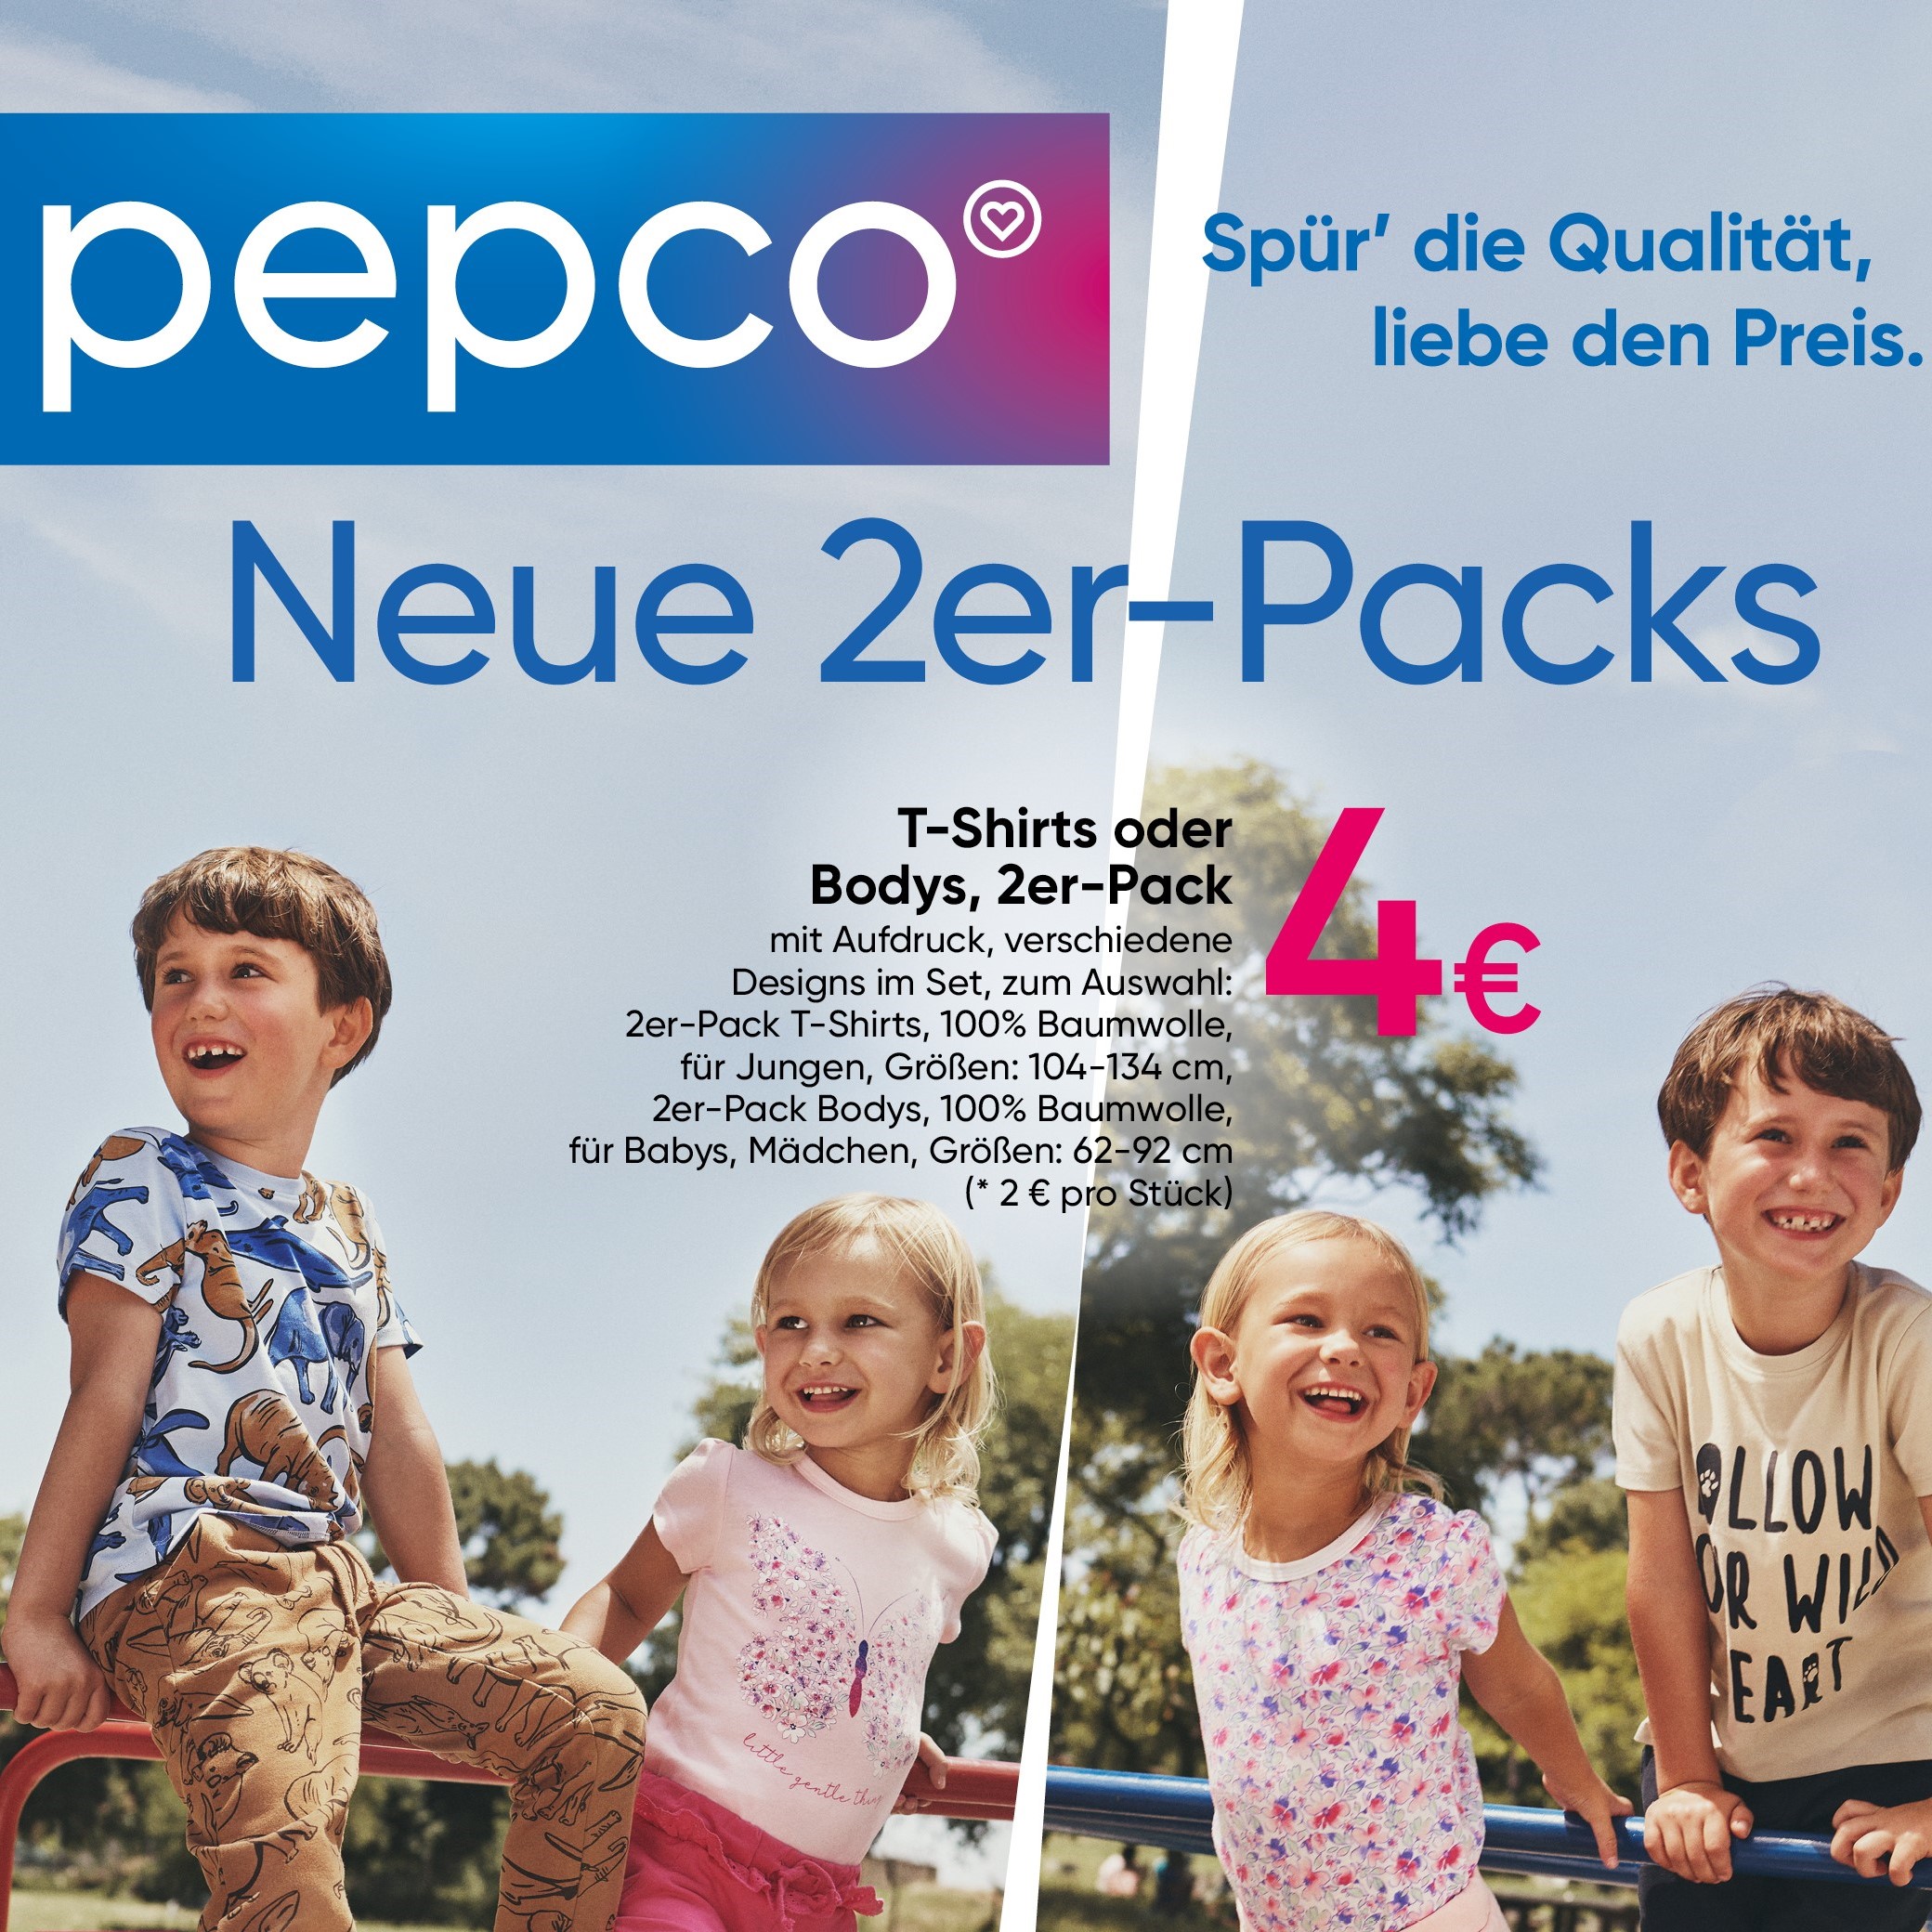 PEPCO P20 Promotion